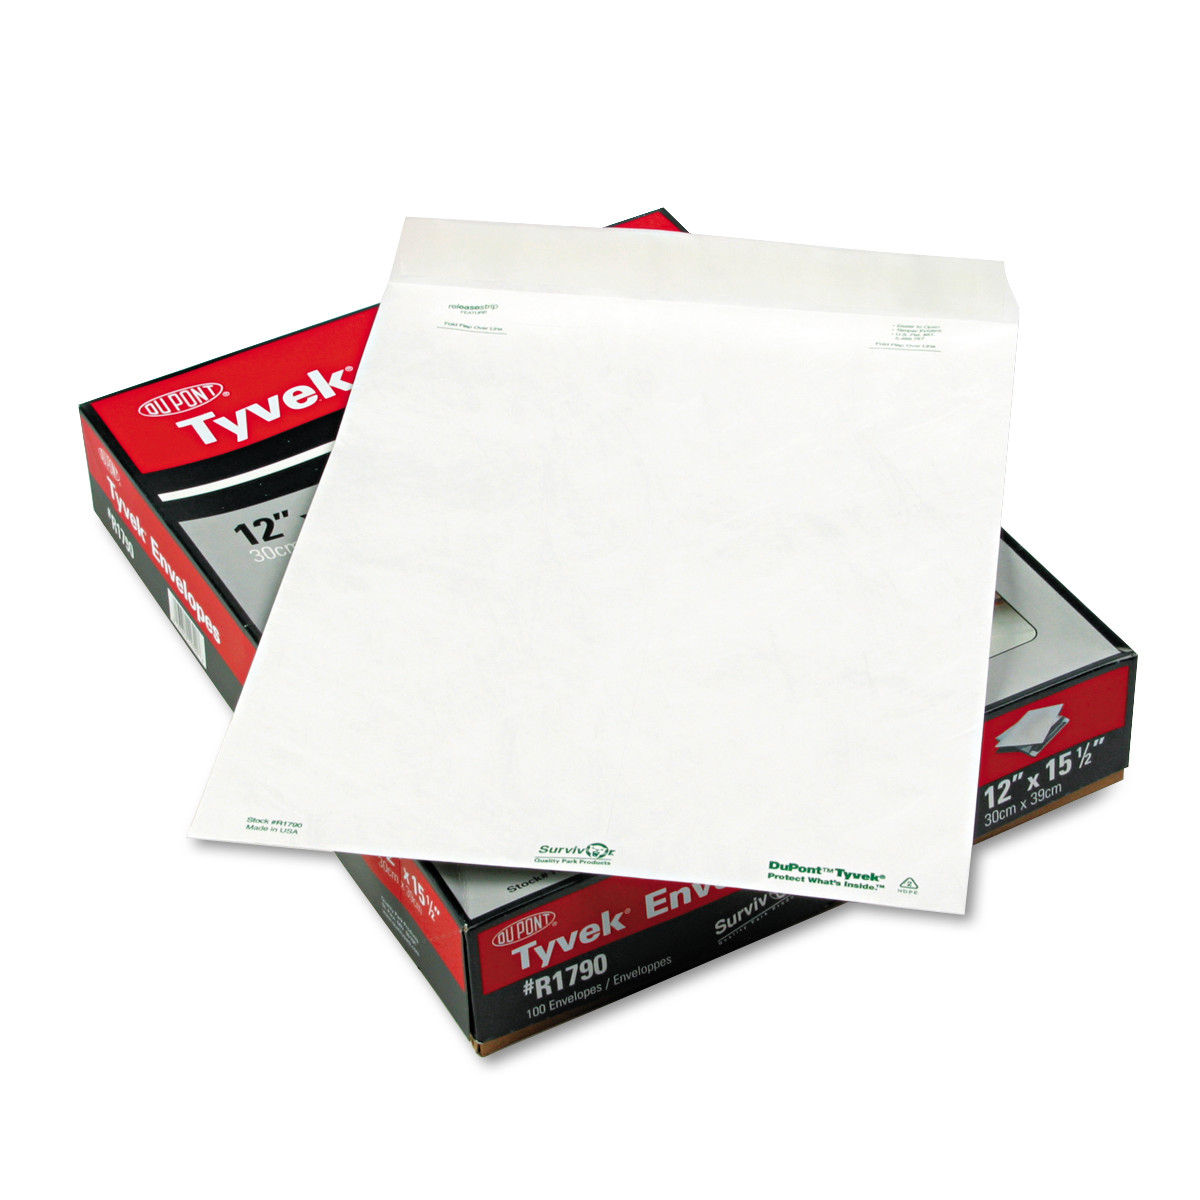 Quality Park Flap-Stik Open-end Envelopes - Catalog - #15 1/2 - 12" Width x 15 1/2" Length - 14 lb - Peel & Seal - Tyvek - 100 /